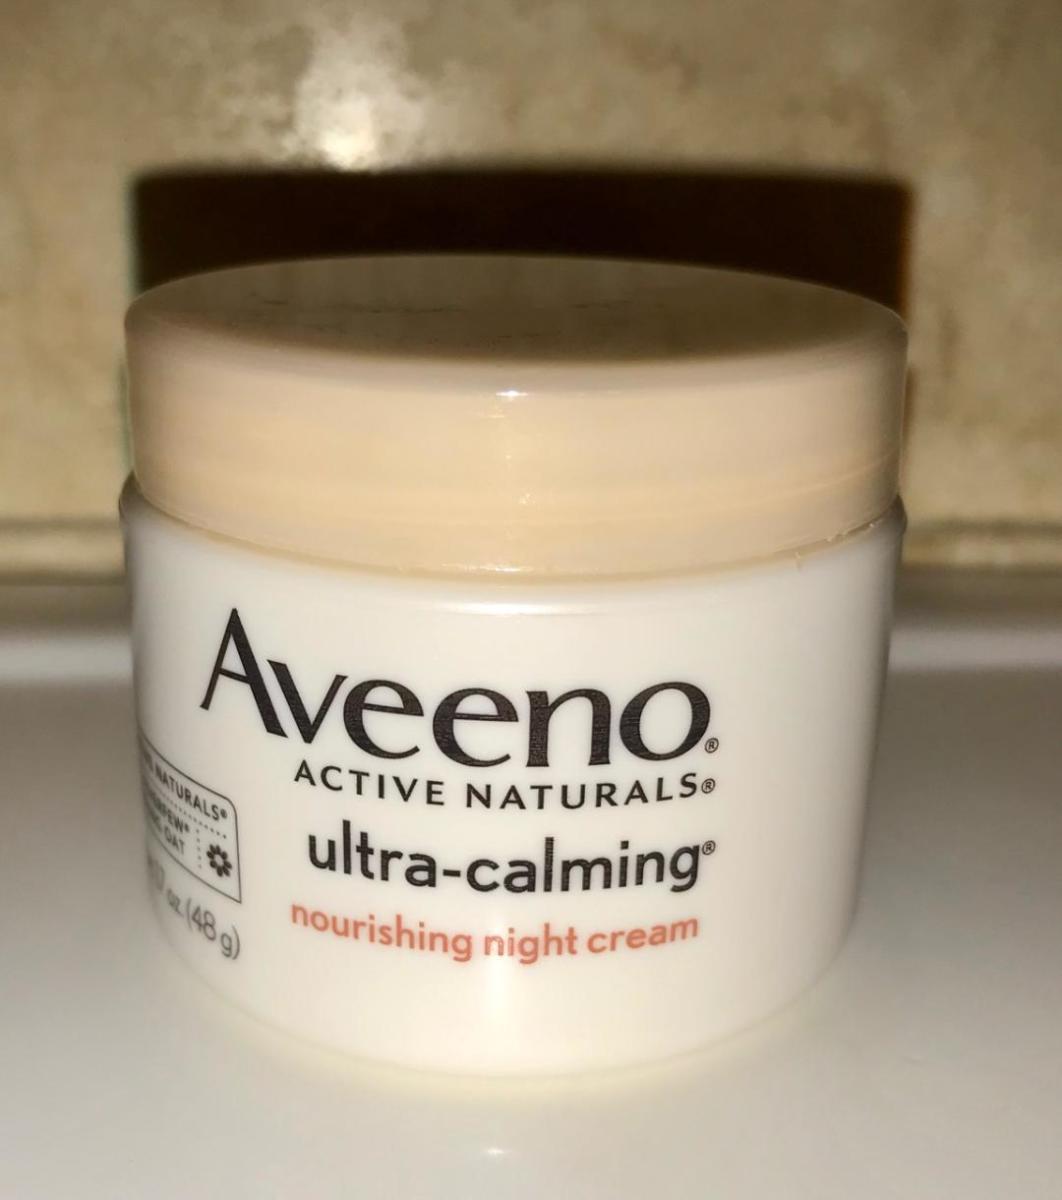 A jar of Aveeno Ultra-Calming Night Cream.